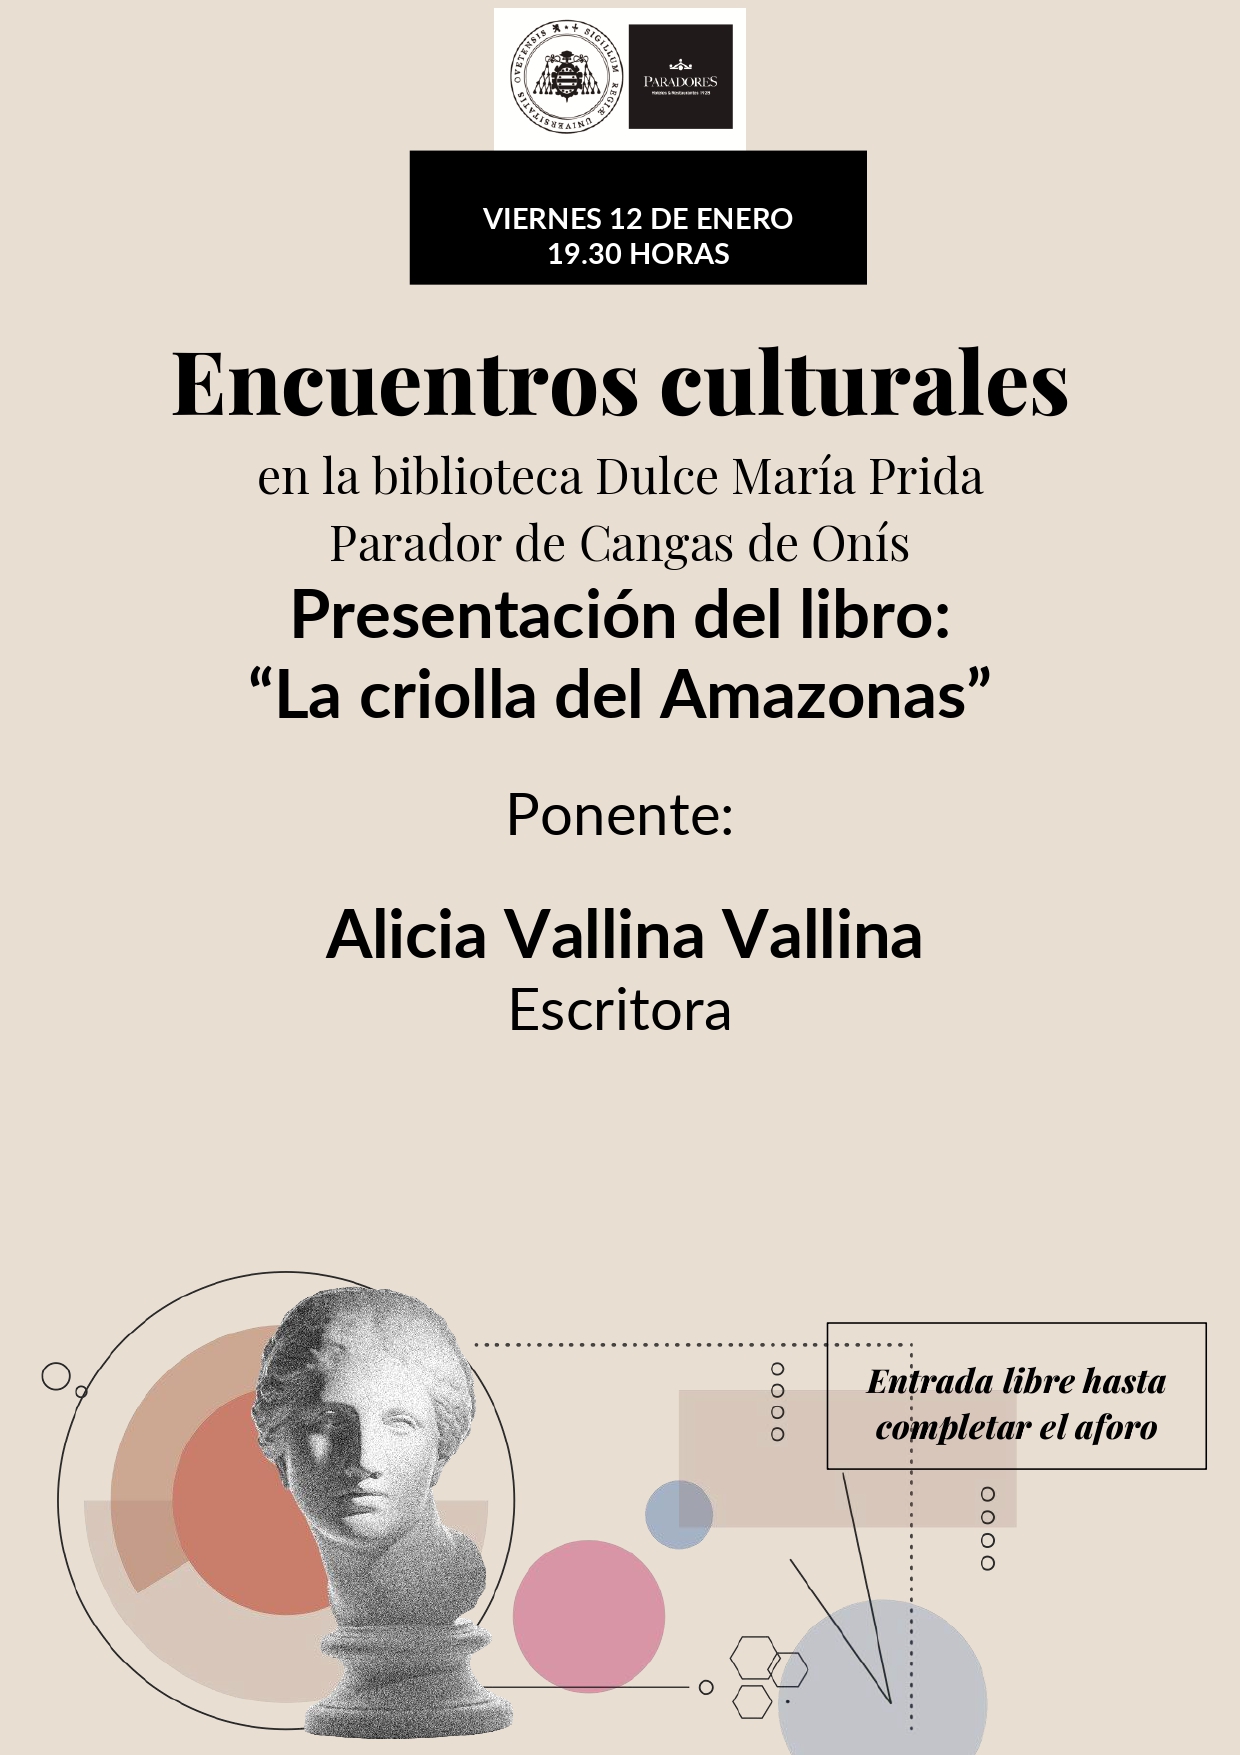 Alicia Vallina